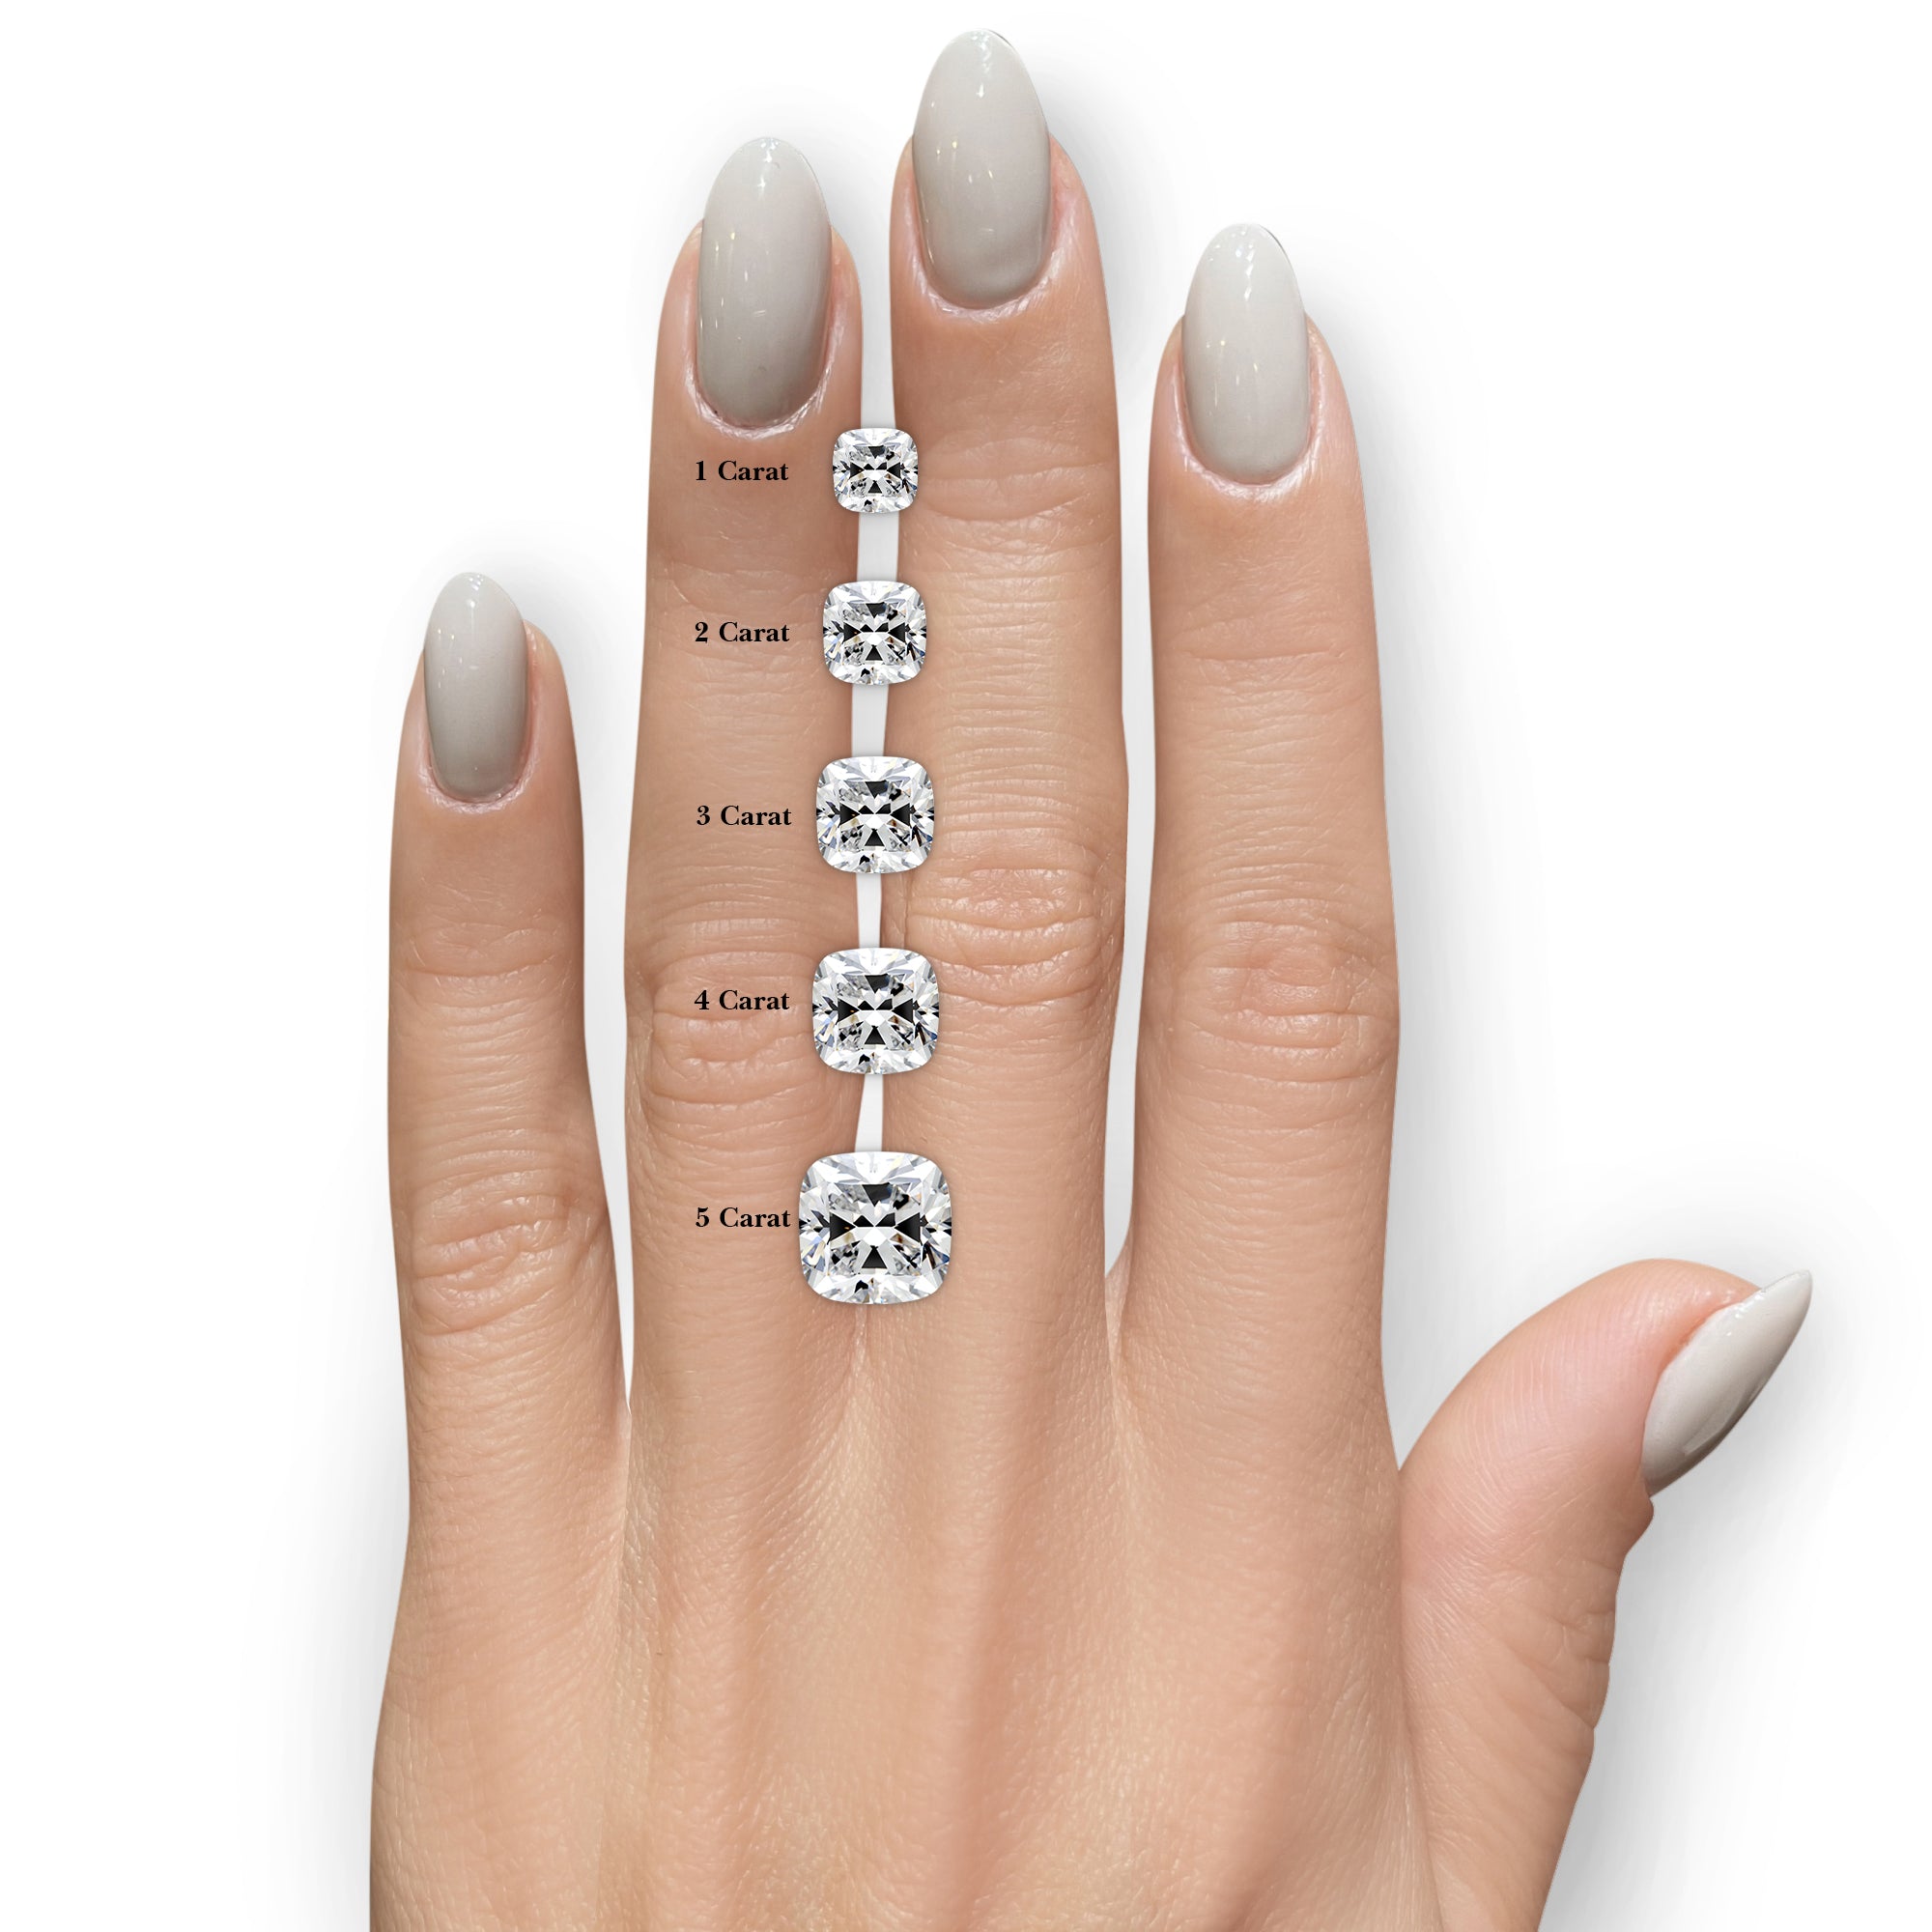 Alice Diamond Engagement Ring -14K White Gold